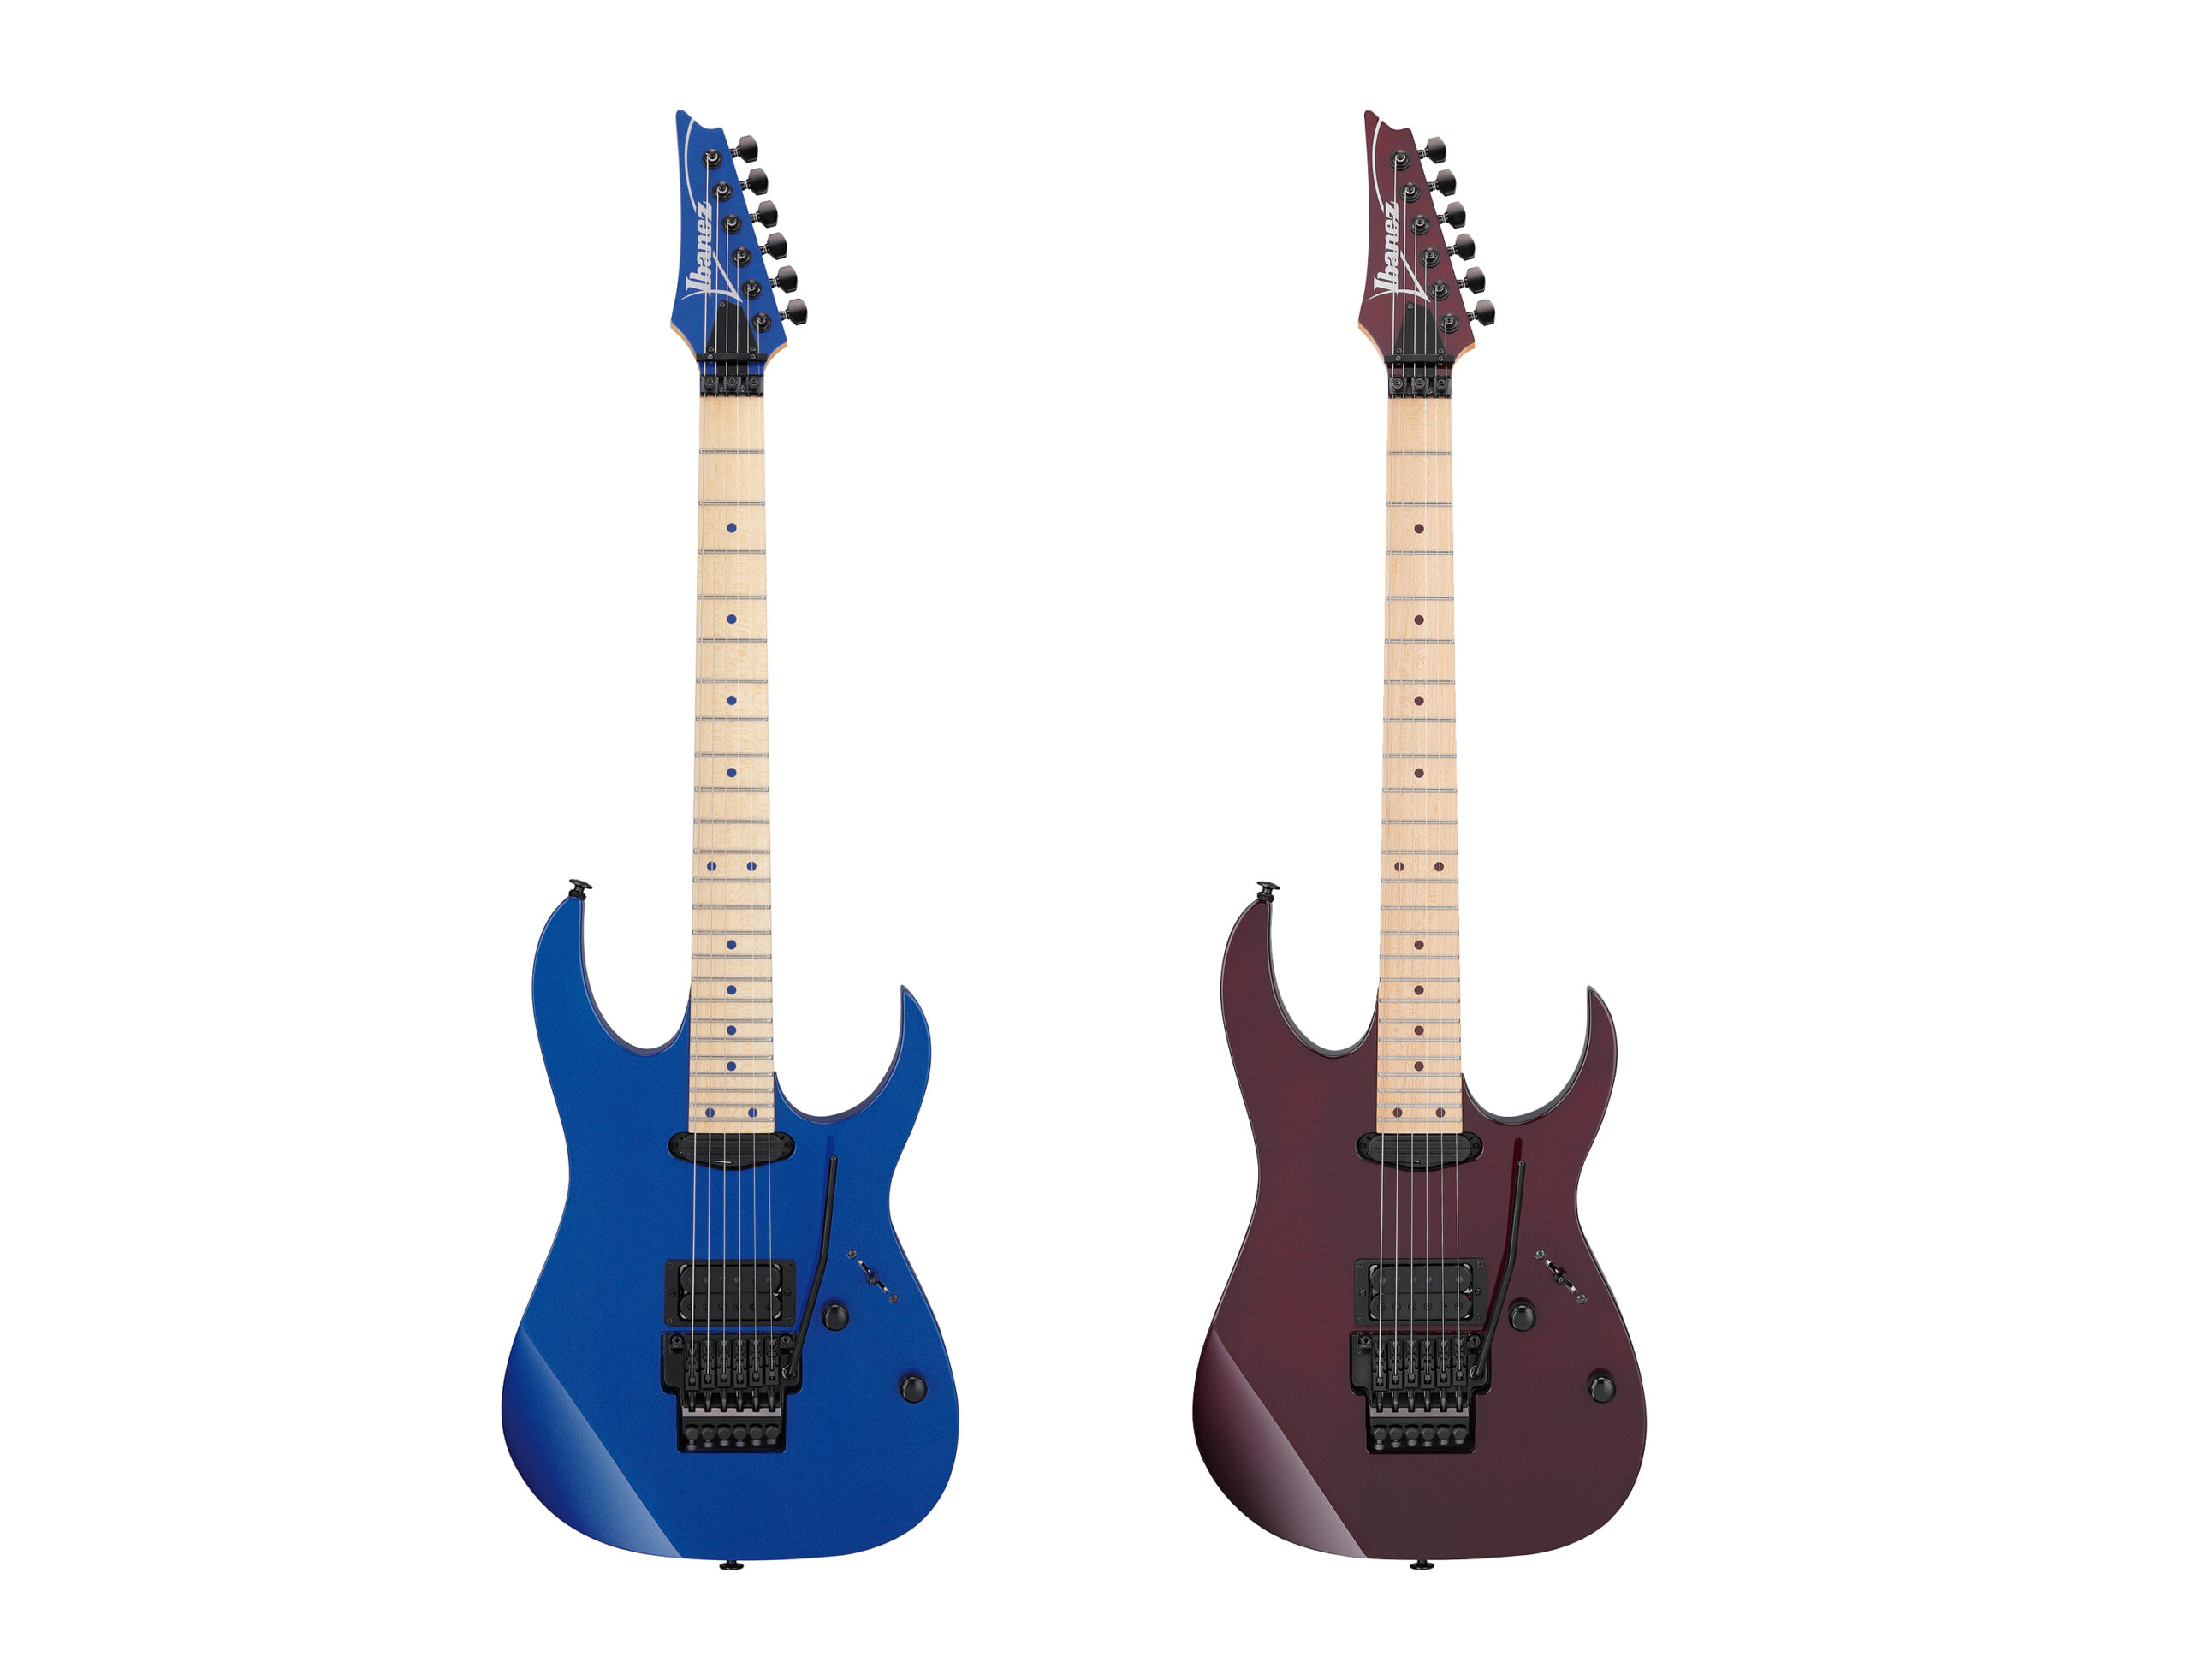 Ibanezエレキギター 限定新製品 RG565x2色 発売